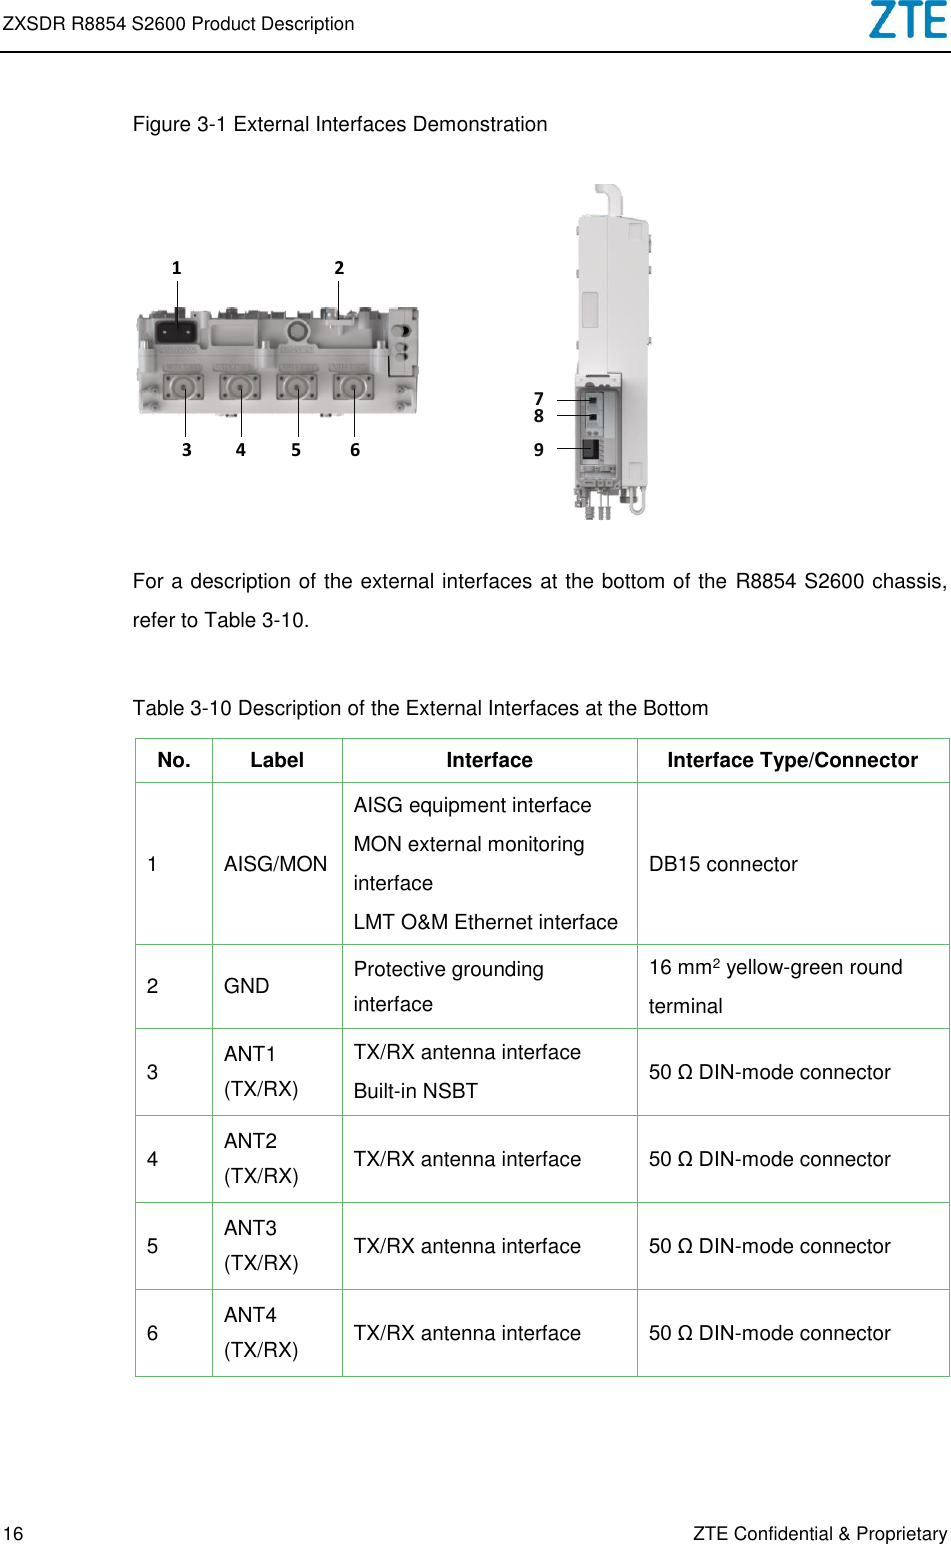 Page 18 of ZTE R8854S2600 Macro Radio Remote Unit User Manual ZXSDR R8854 S2600 Product Description